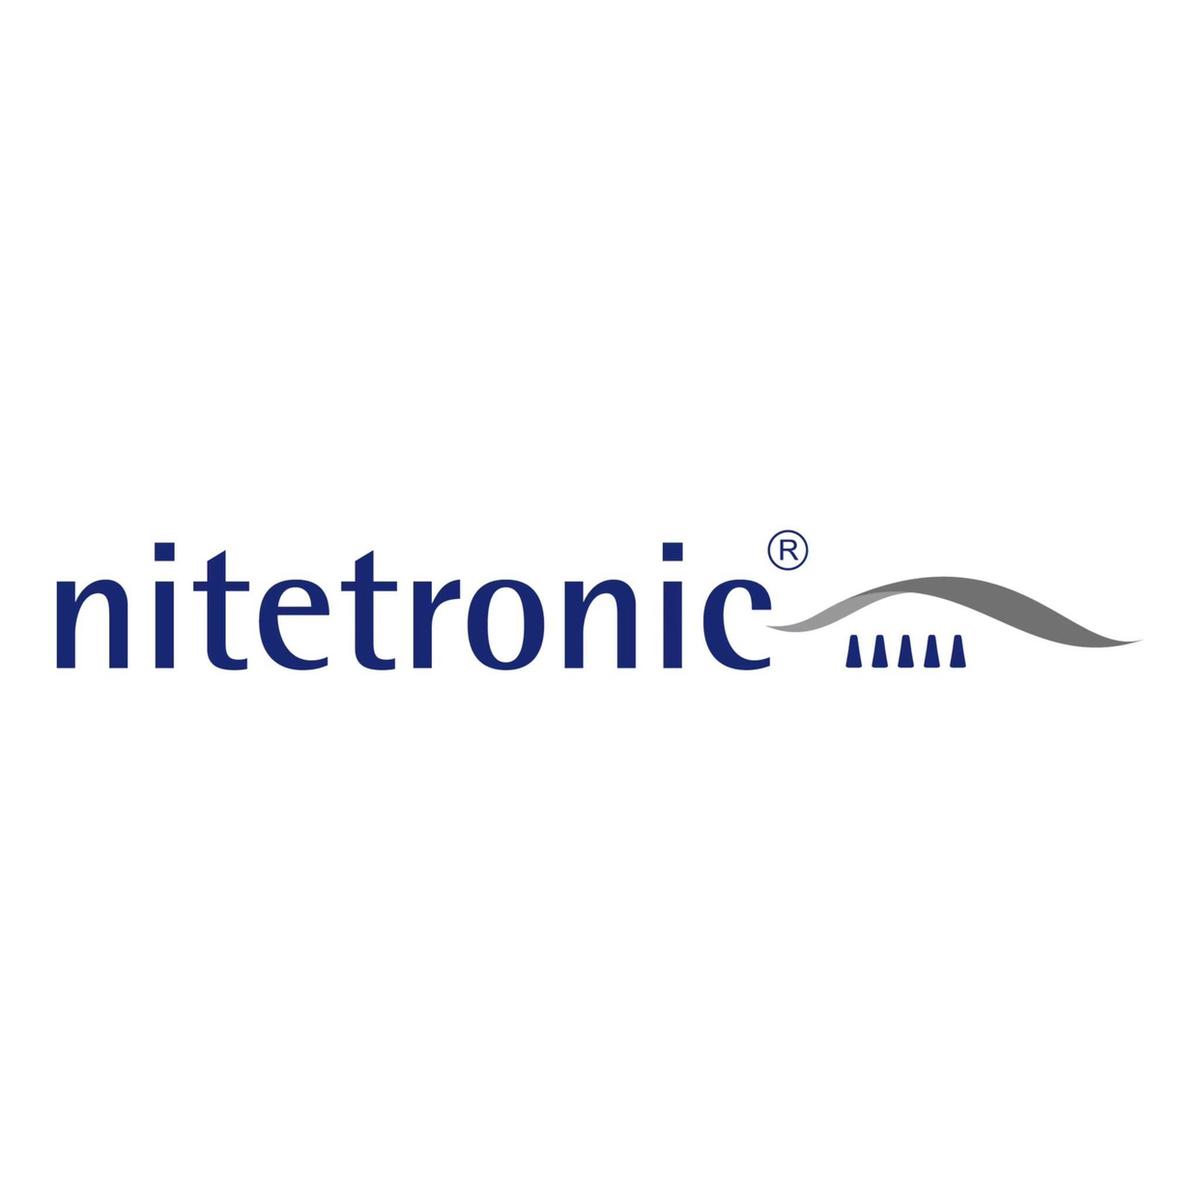 Nitetronic's images